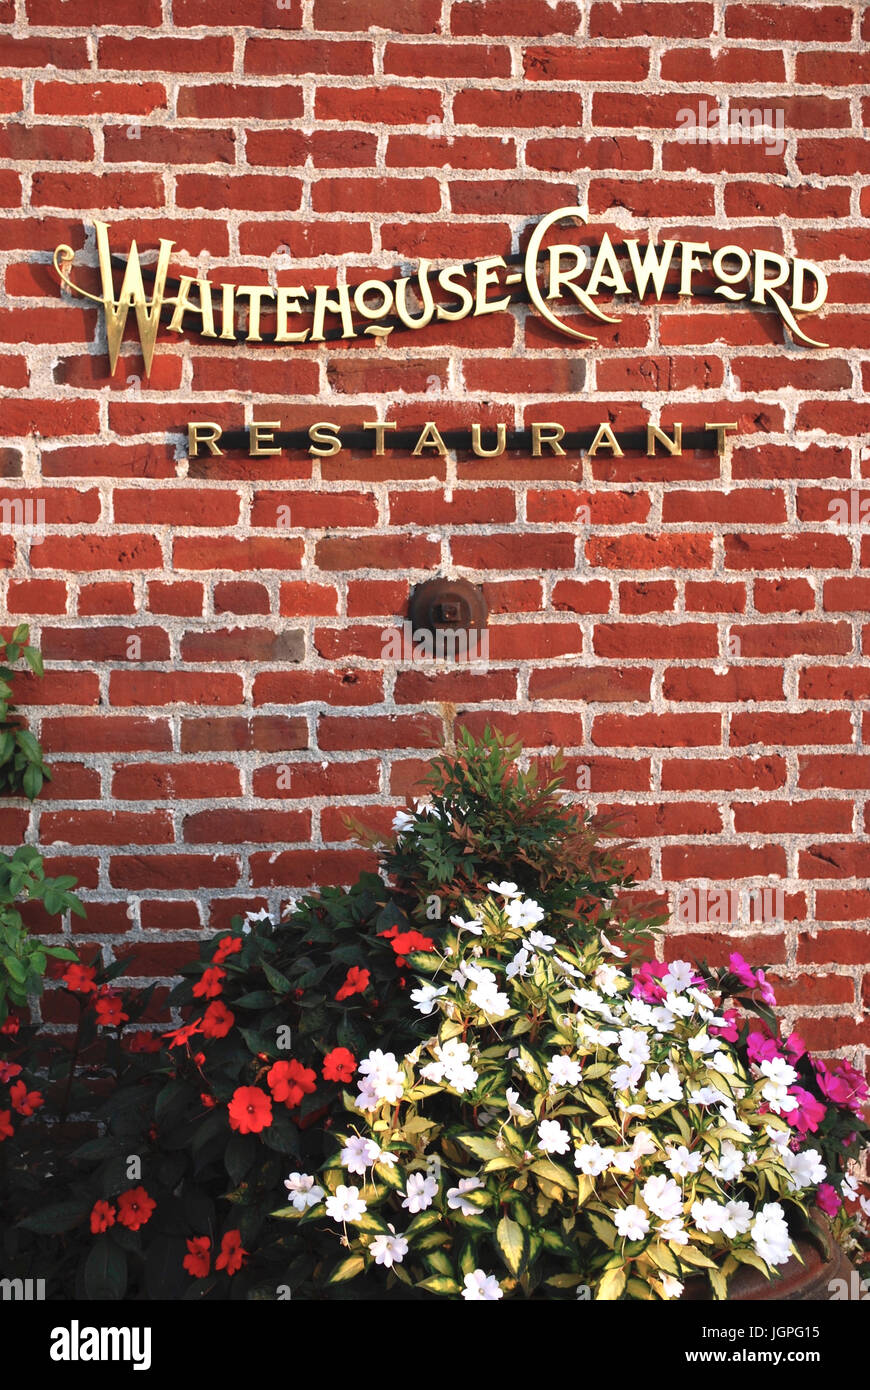 Whitehouse-Crawford Restaurant, Walla Walla, WA, USA Stockfoto